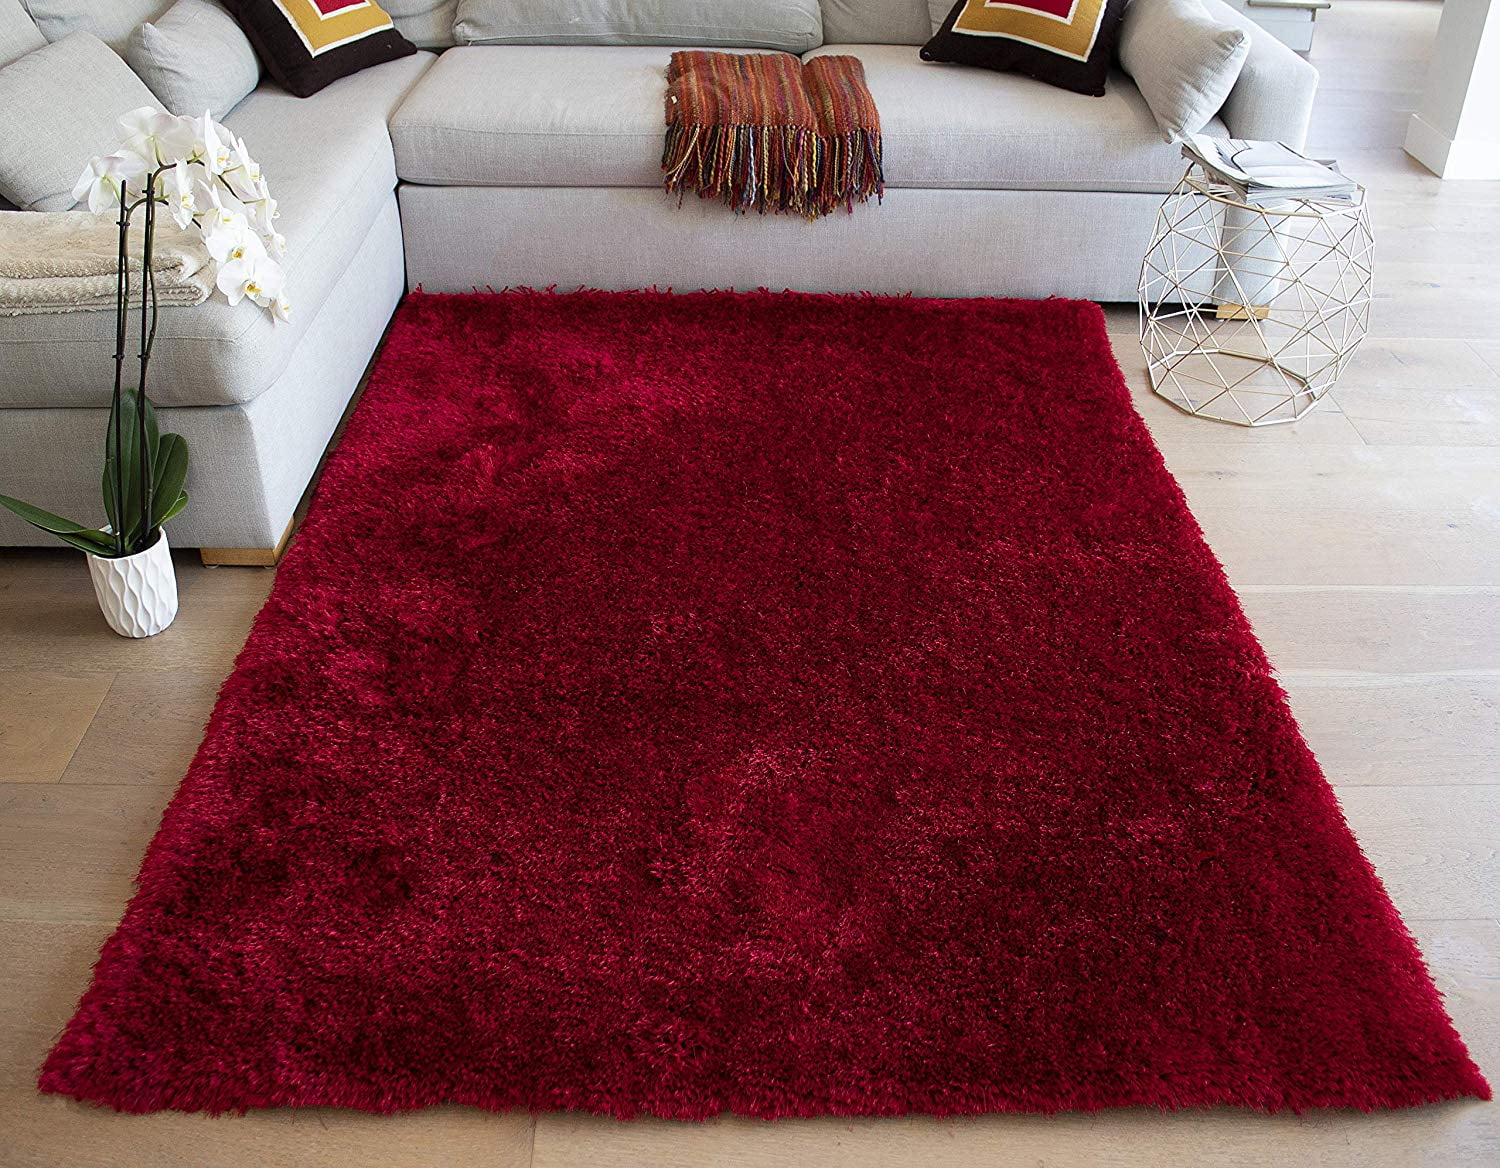 Non-slip Round Big Red Shoe Lipstick Area Rugs Room Floor Yoga Carpet Door Mat 